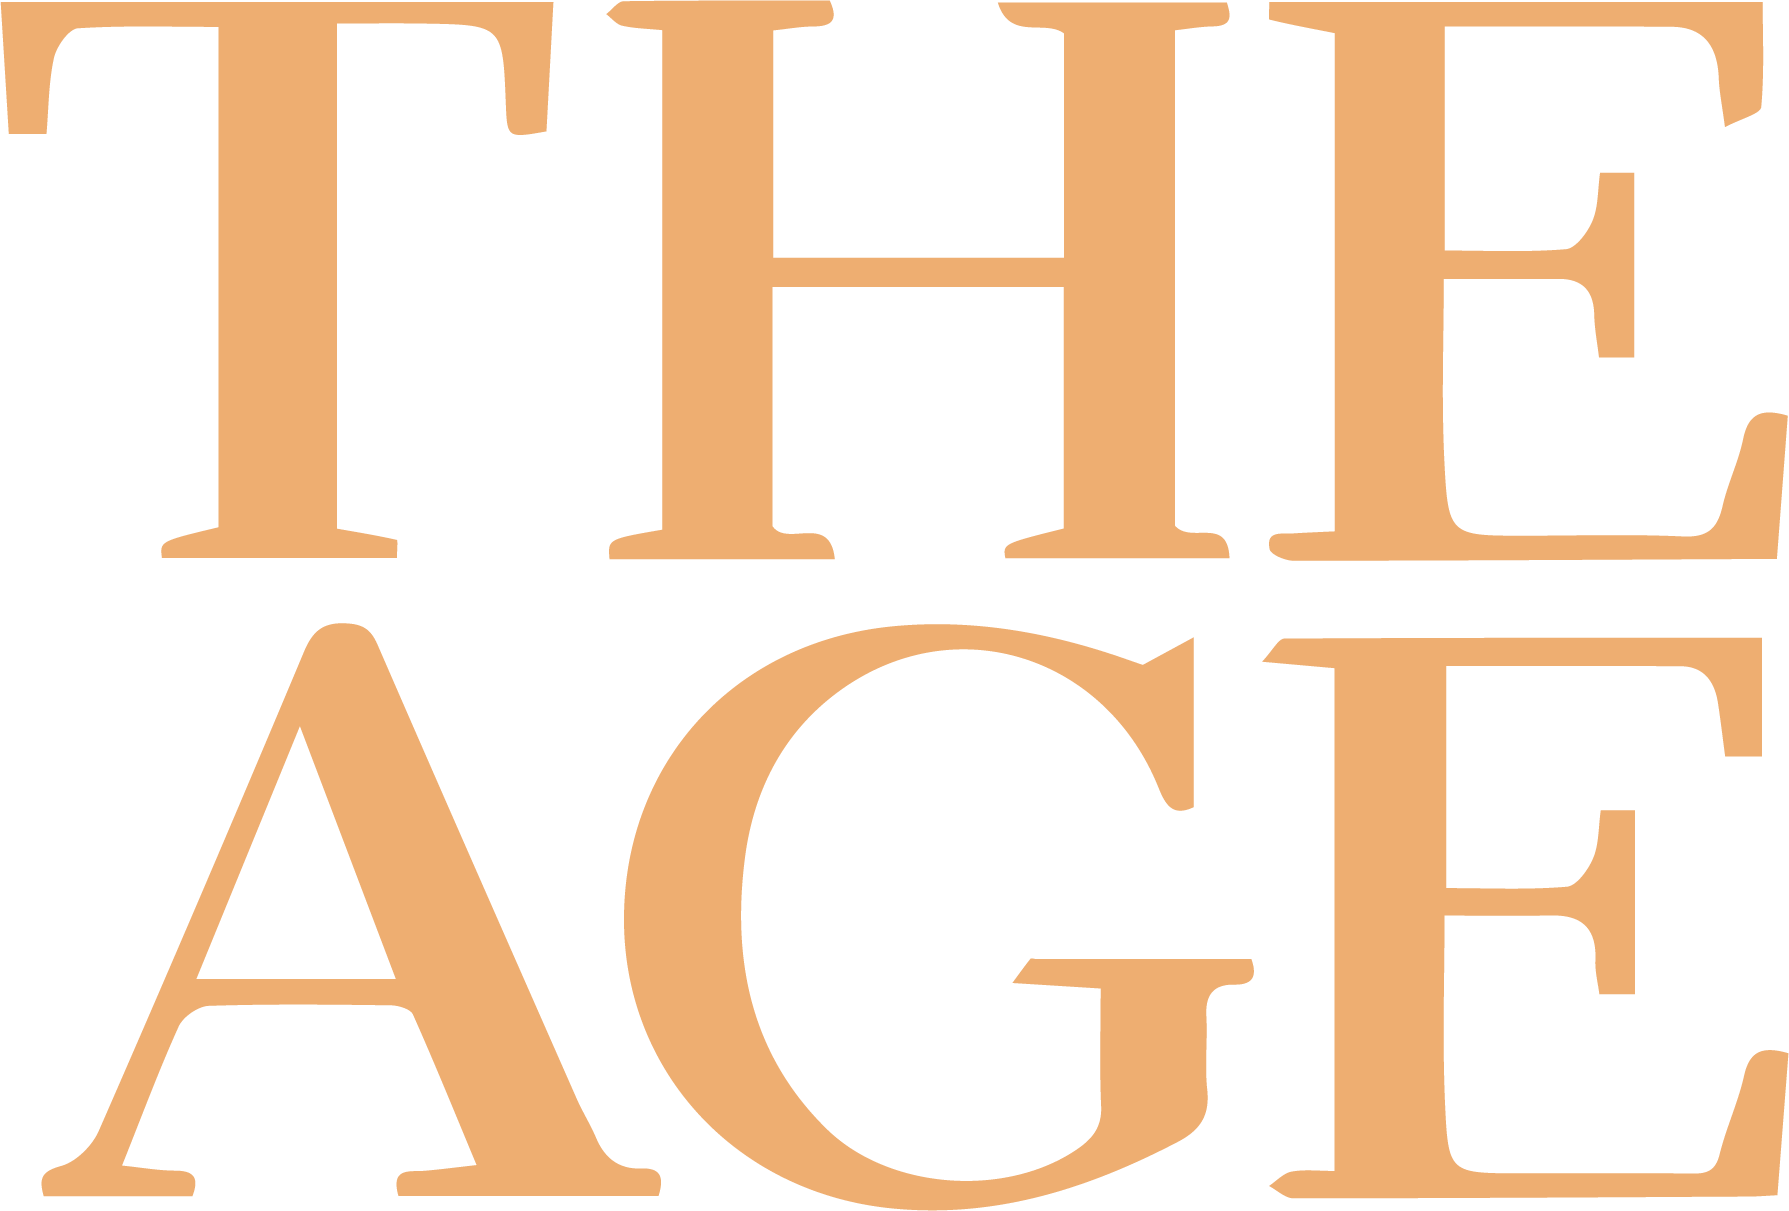 The Age newspaper logo.